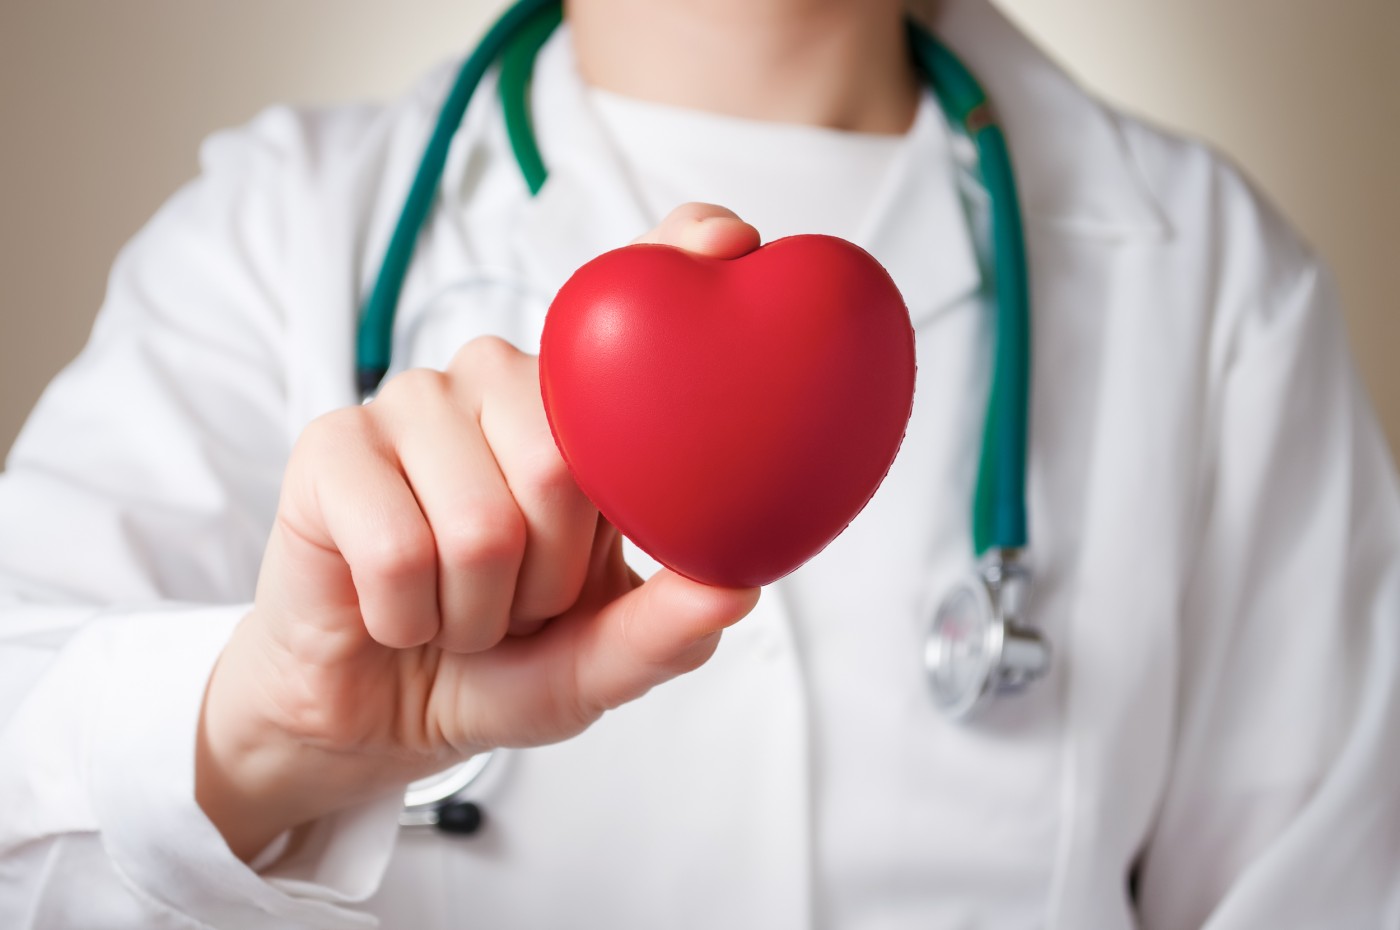 Researchers Report Lipid Resolvin D1 Can Reduce Heart Failure Risk After a Heart Attack